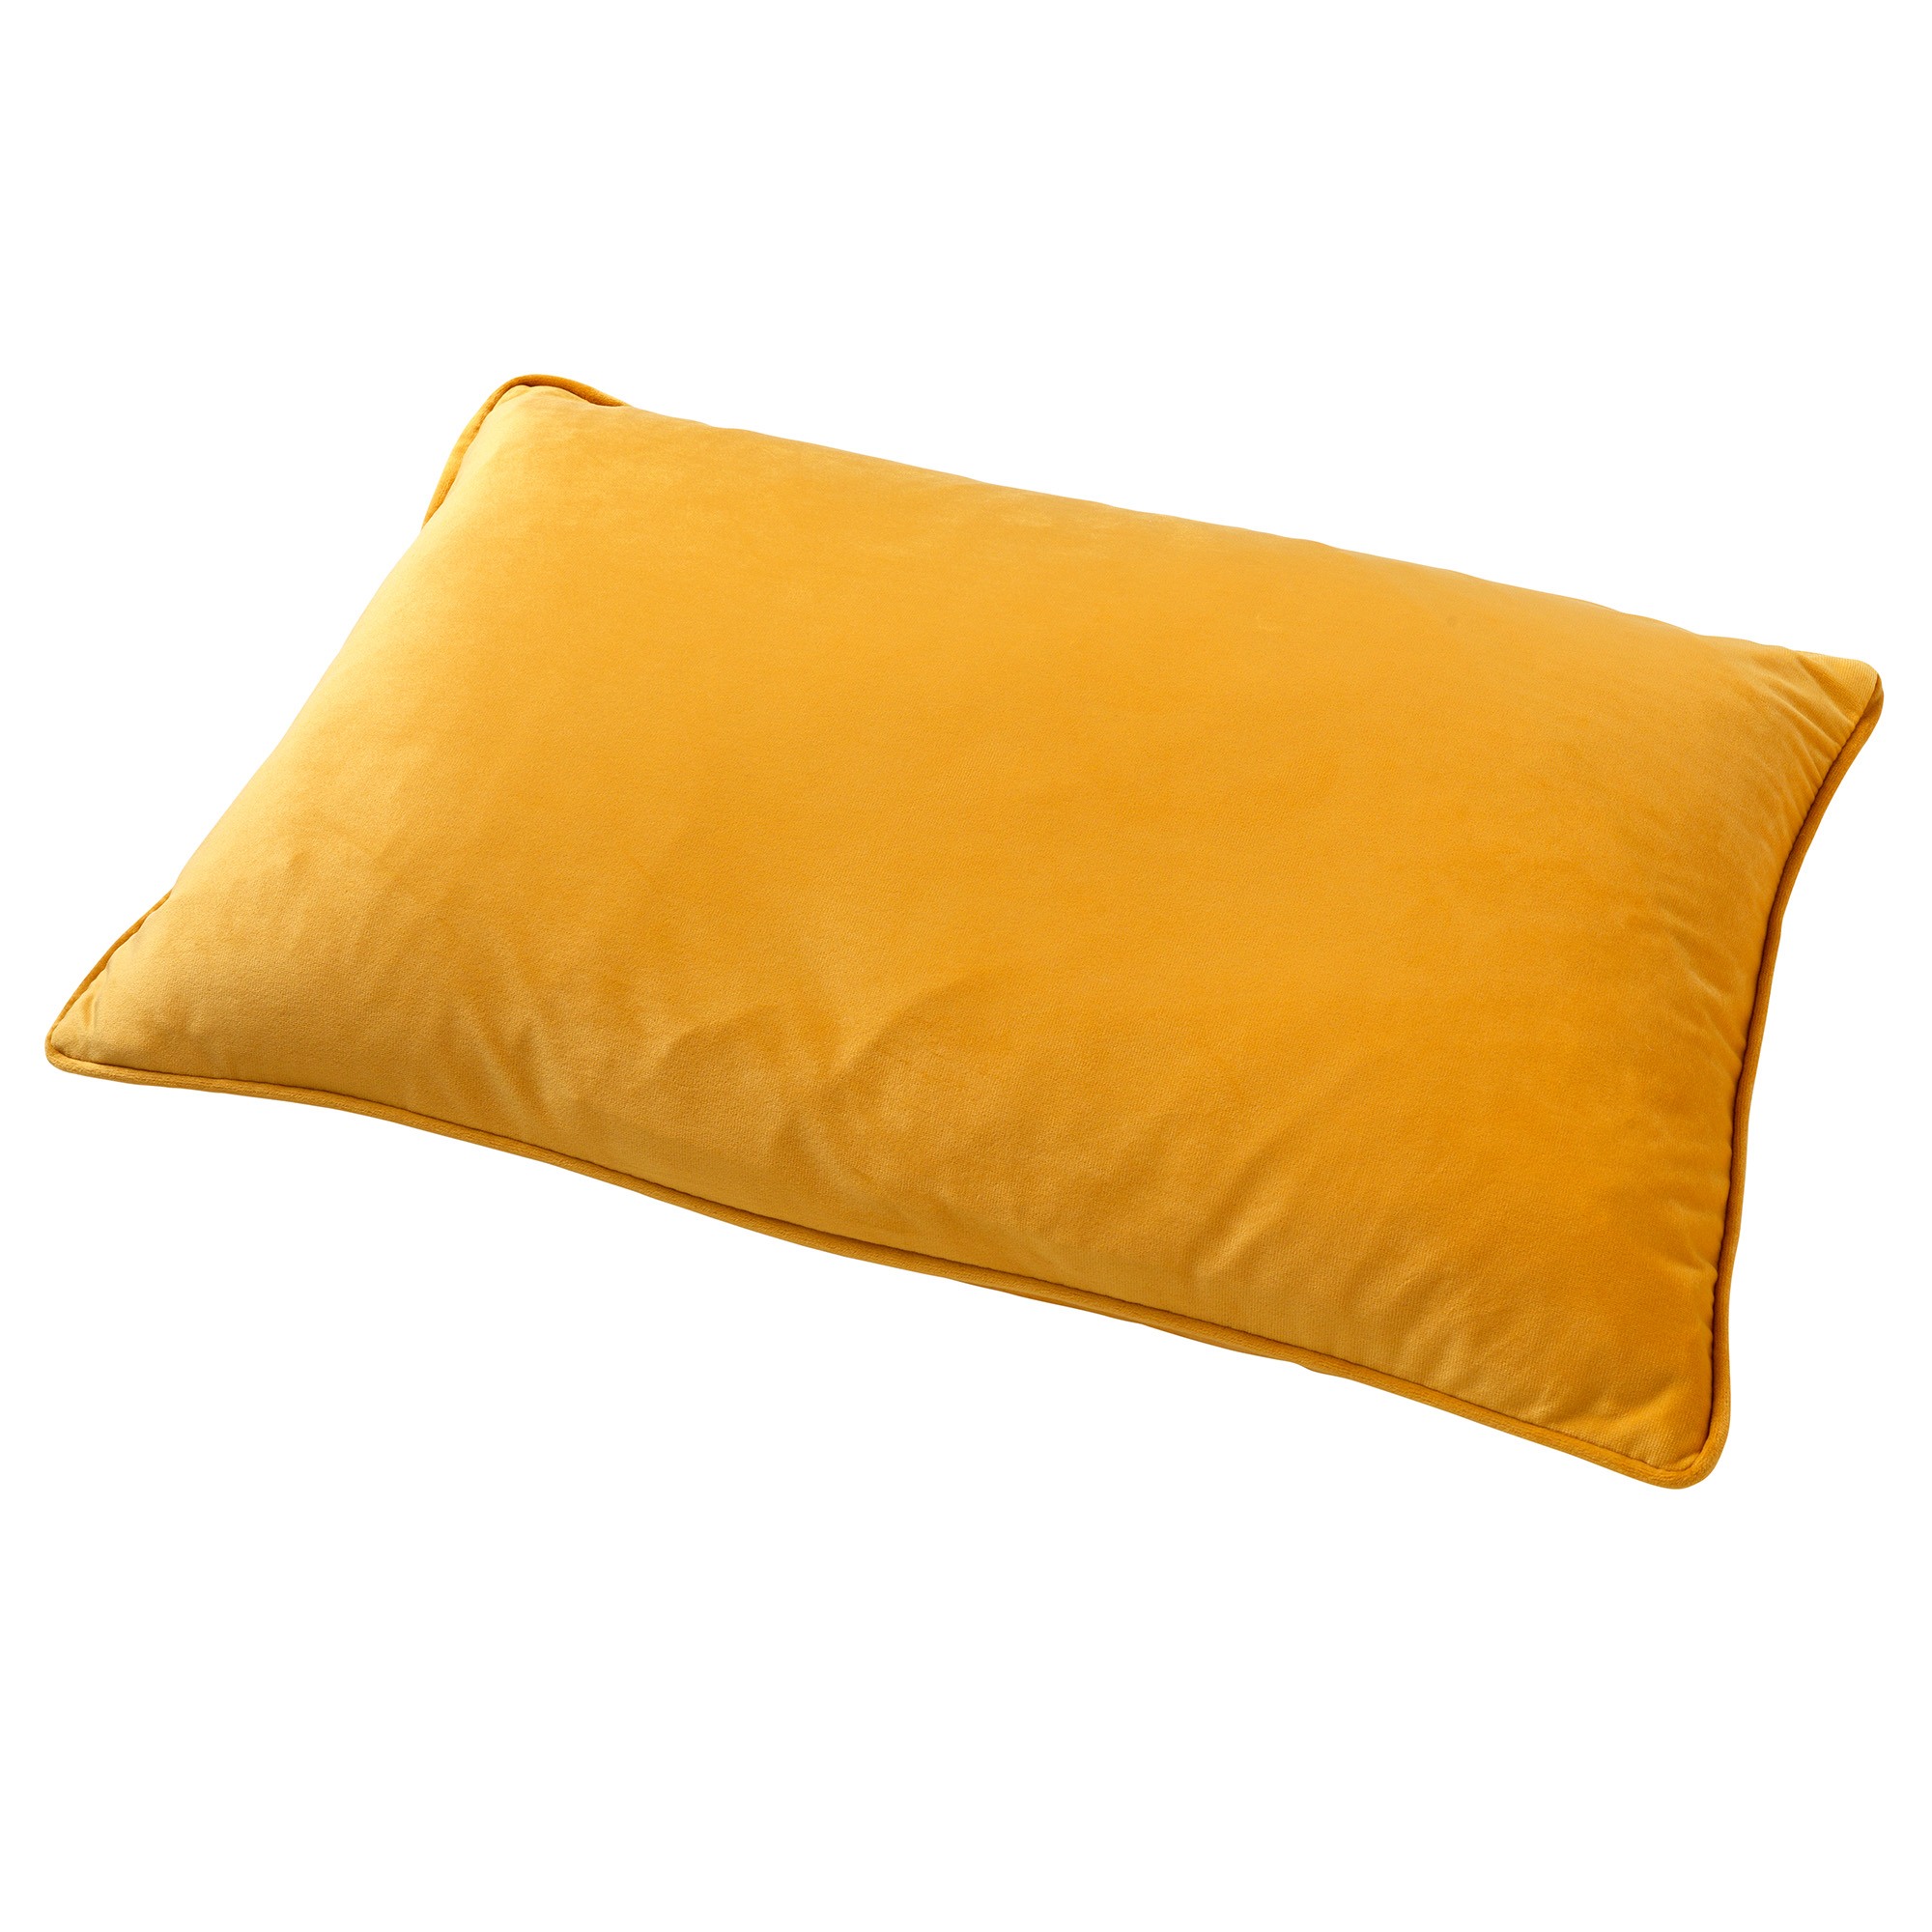 FINN - Kussenhoes velvet 40x60 cm - Golden Glow - geel